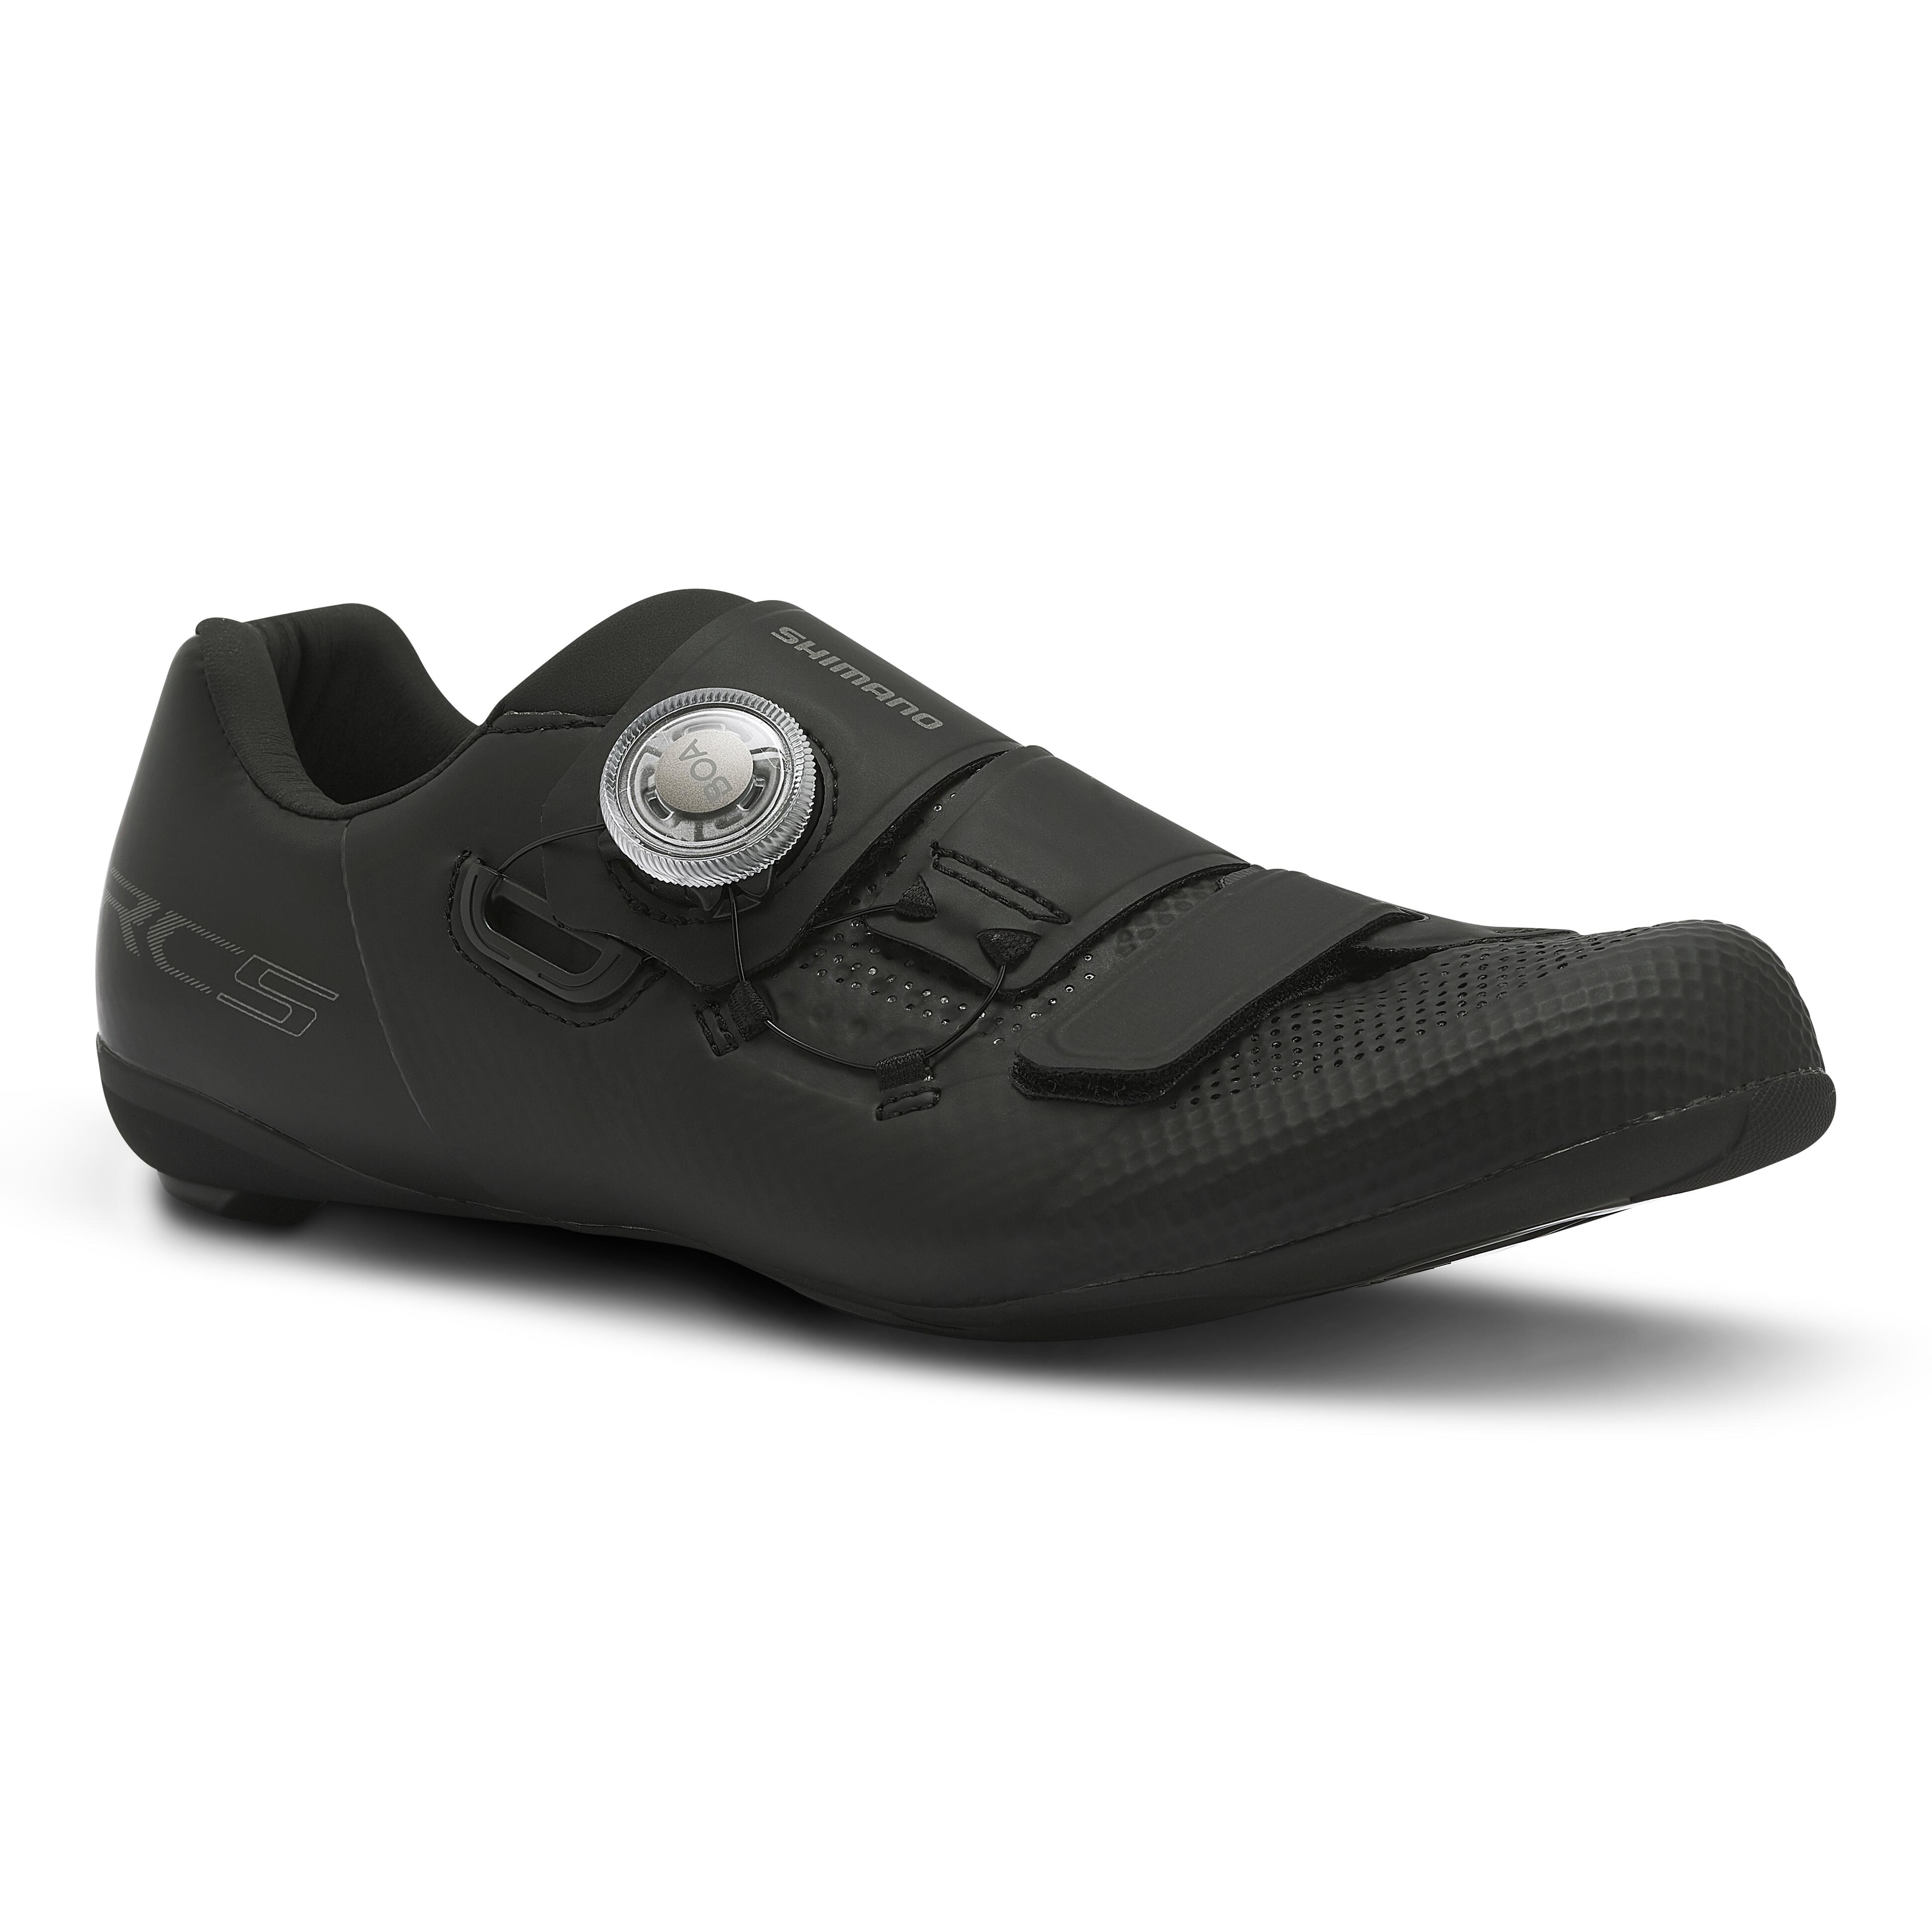 Decathlon UK Shimano Road Cycling Shoes Rc502 - Black